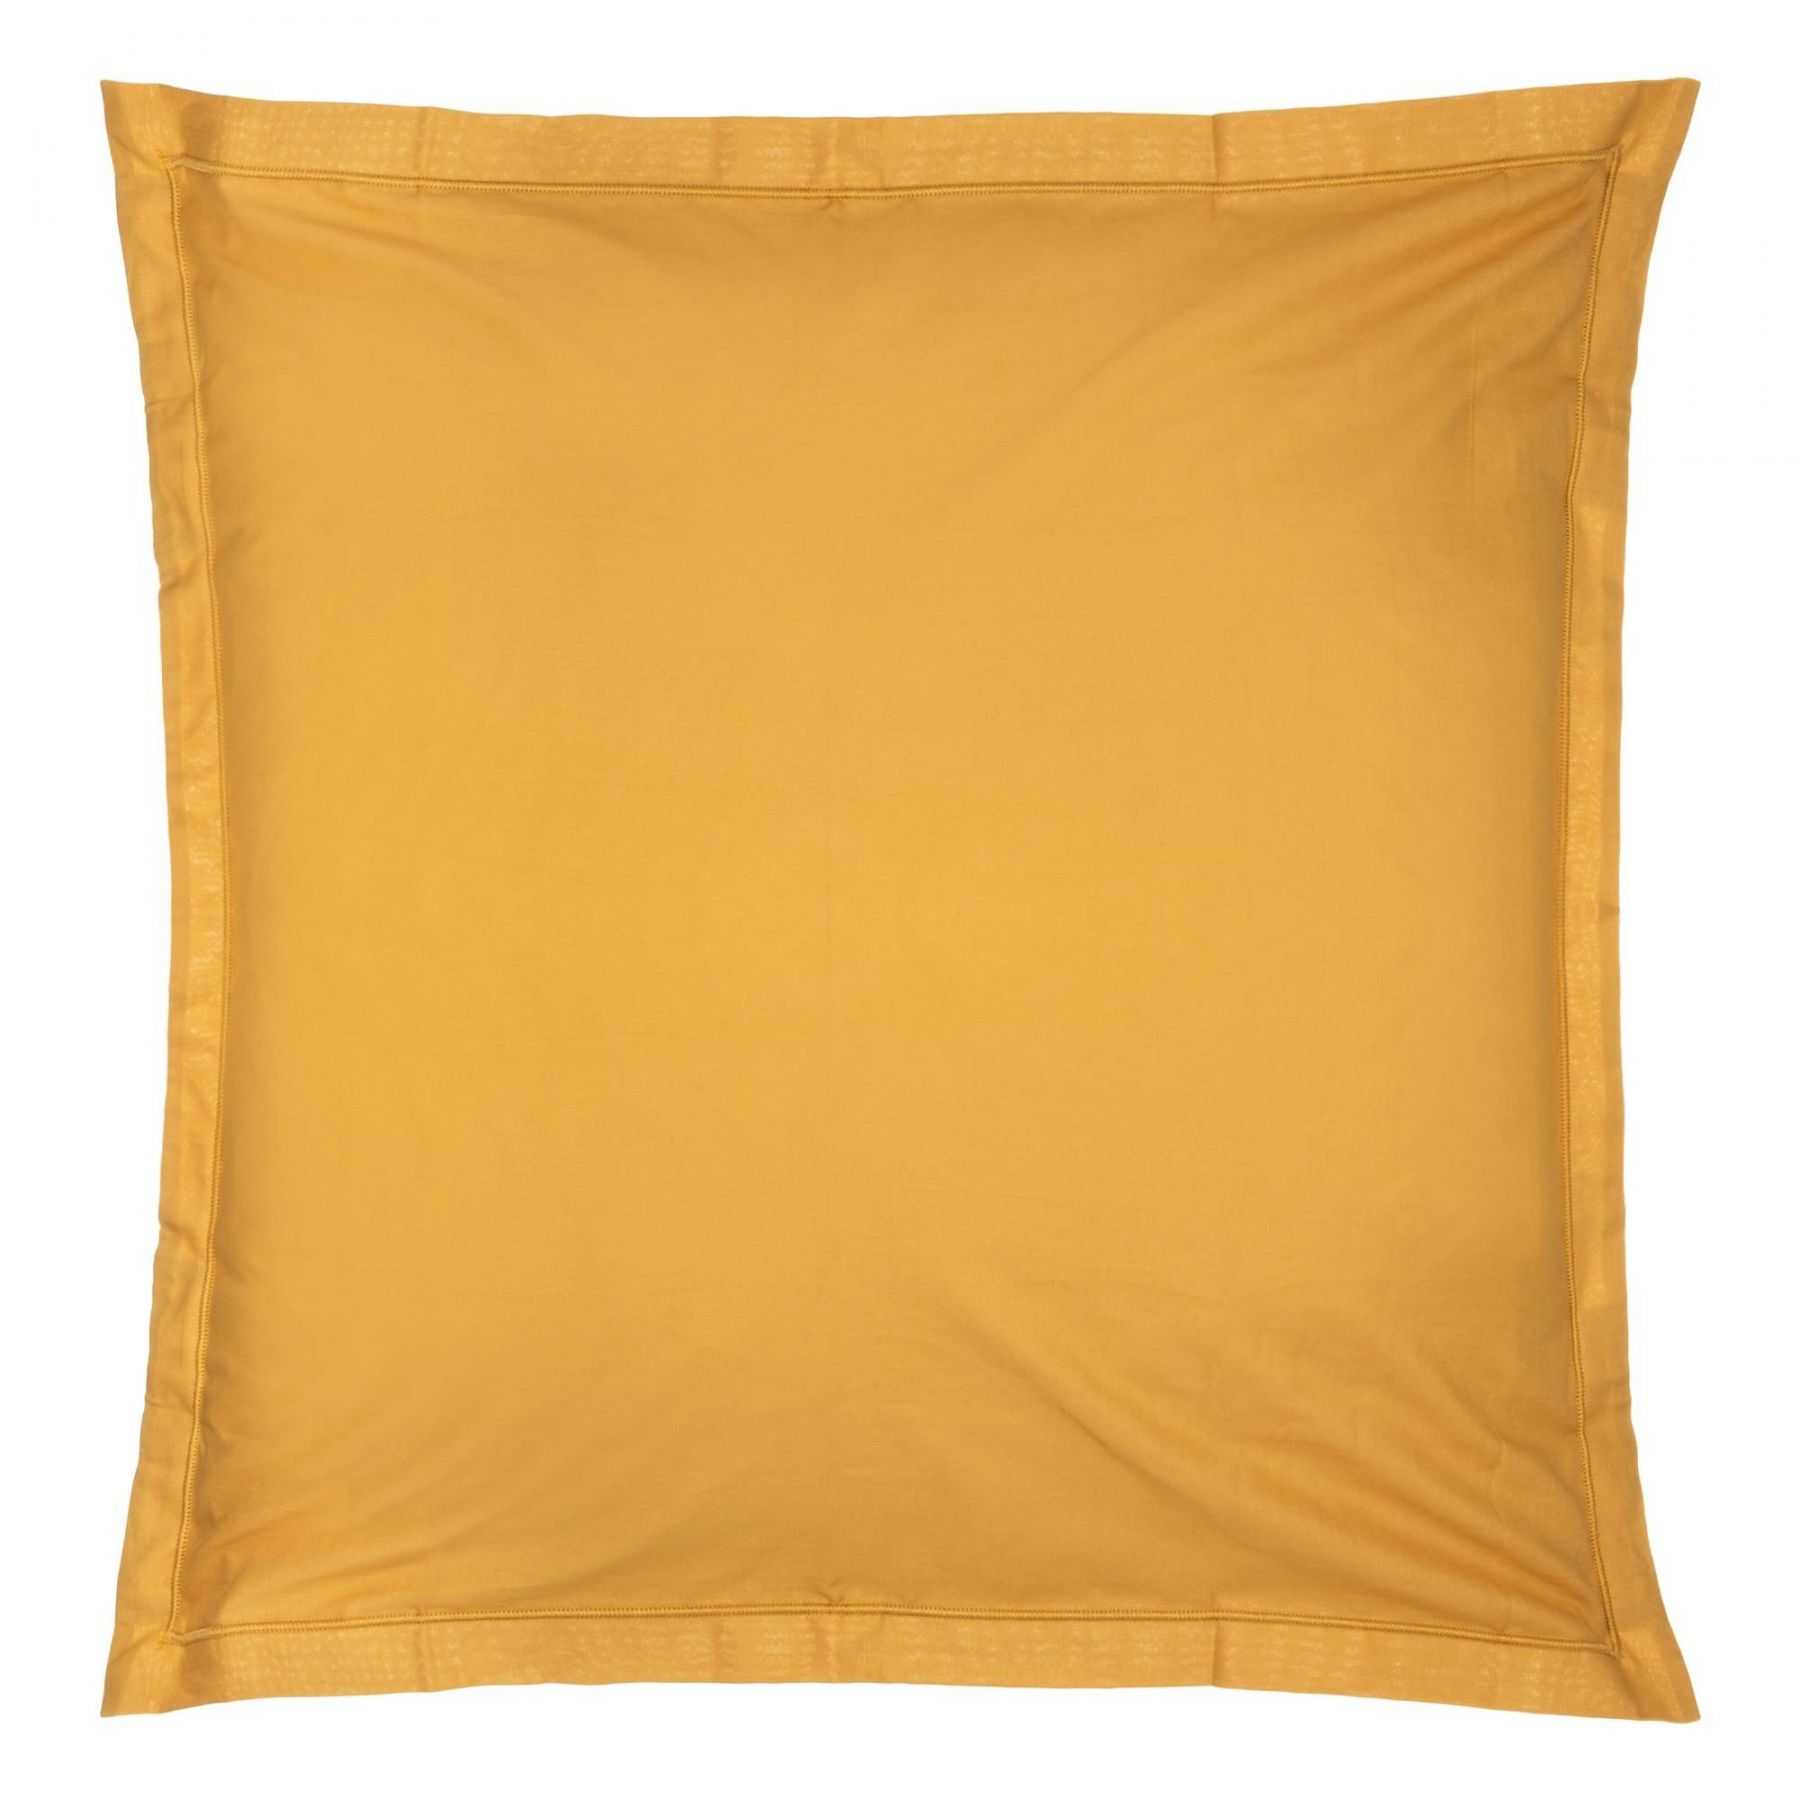 Atmosphera Bavlněný povlak na polštář, 63 x 63 cm, žlutý - EDAXO.CZ s.r.o.